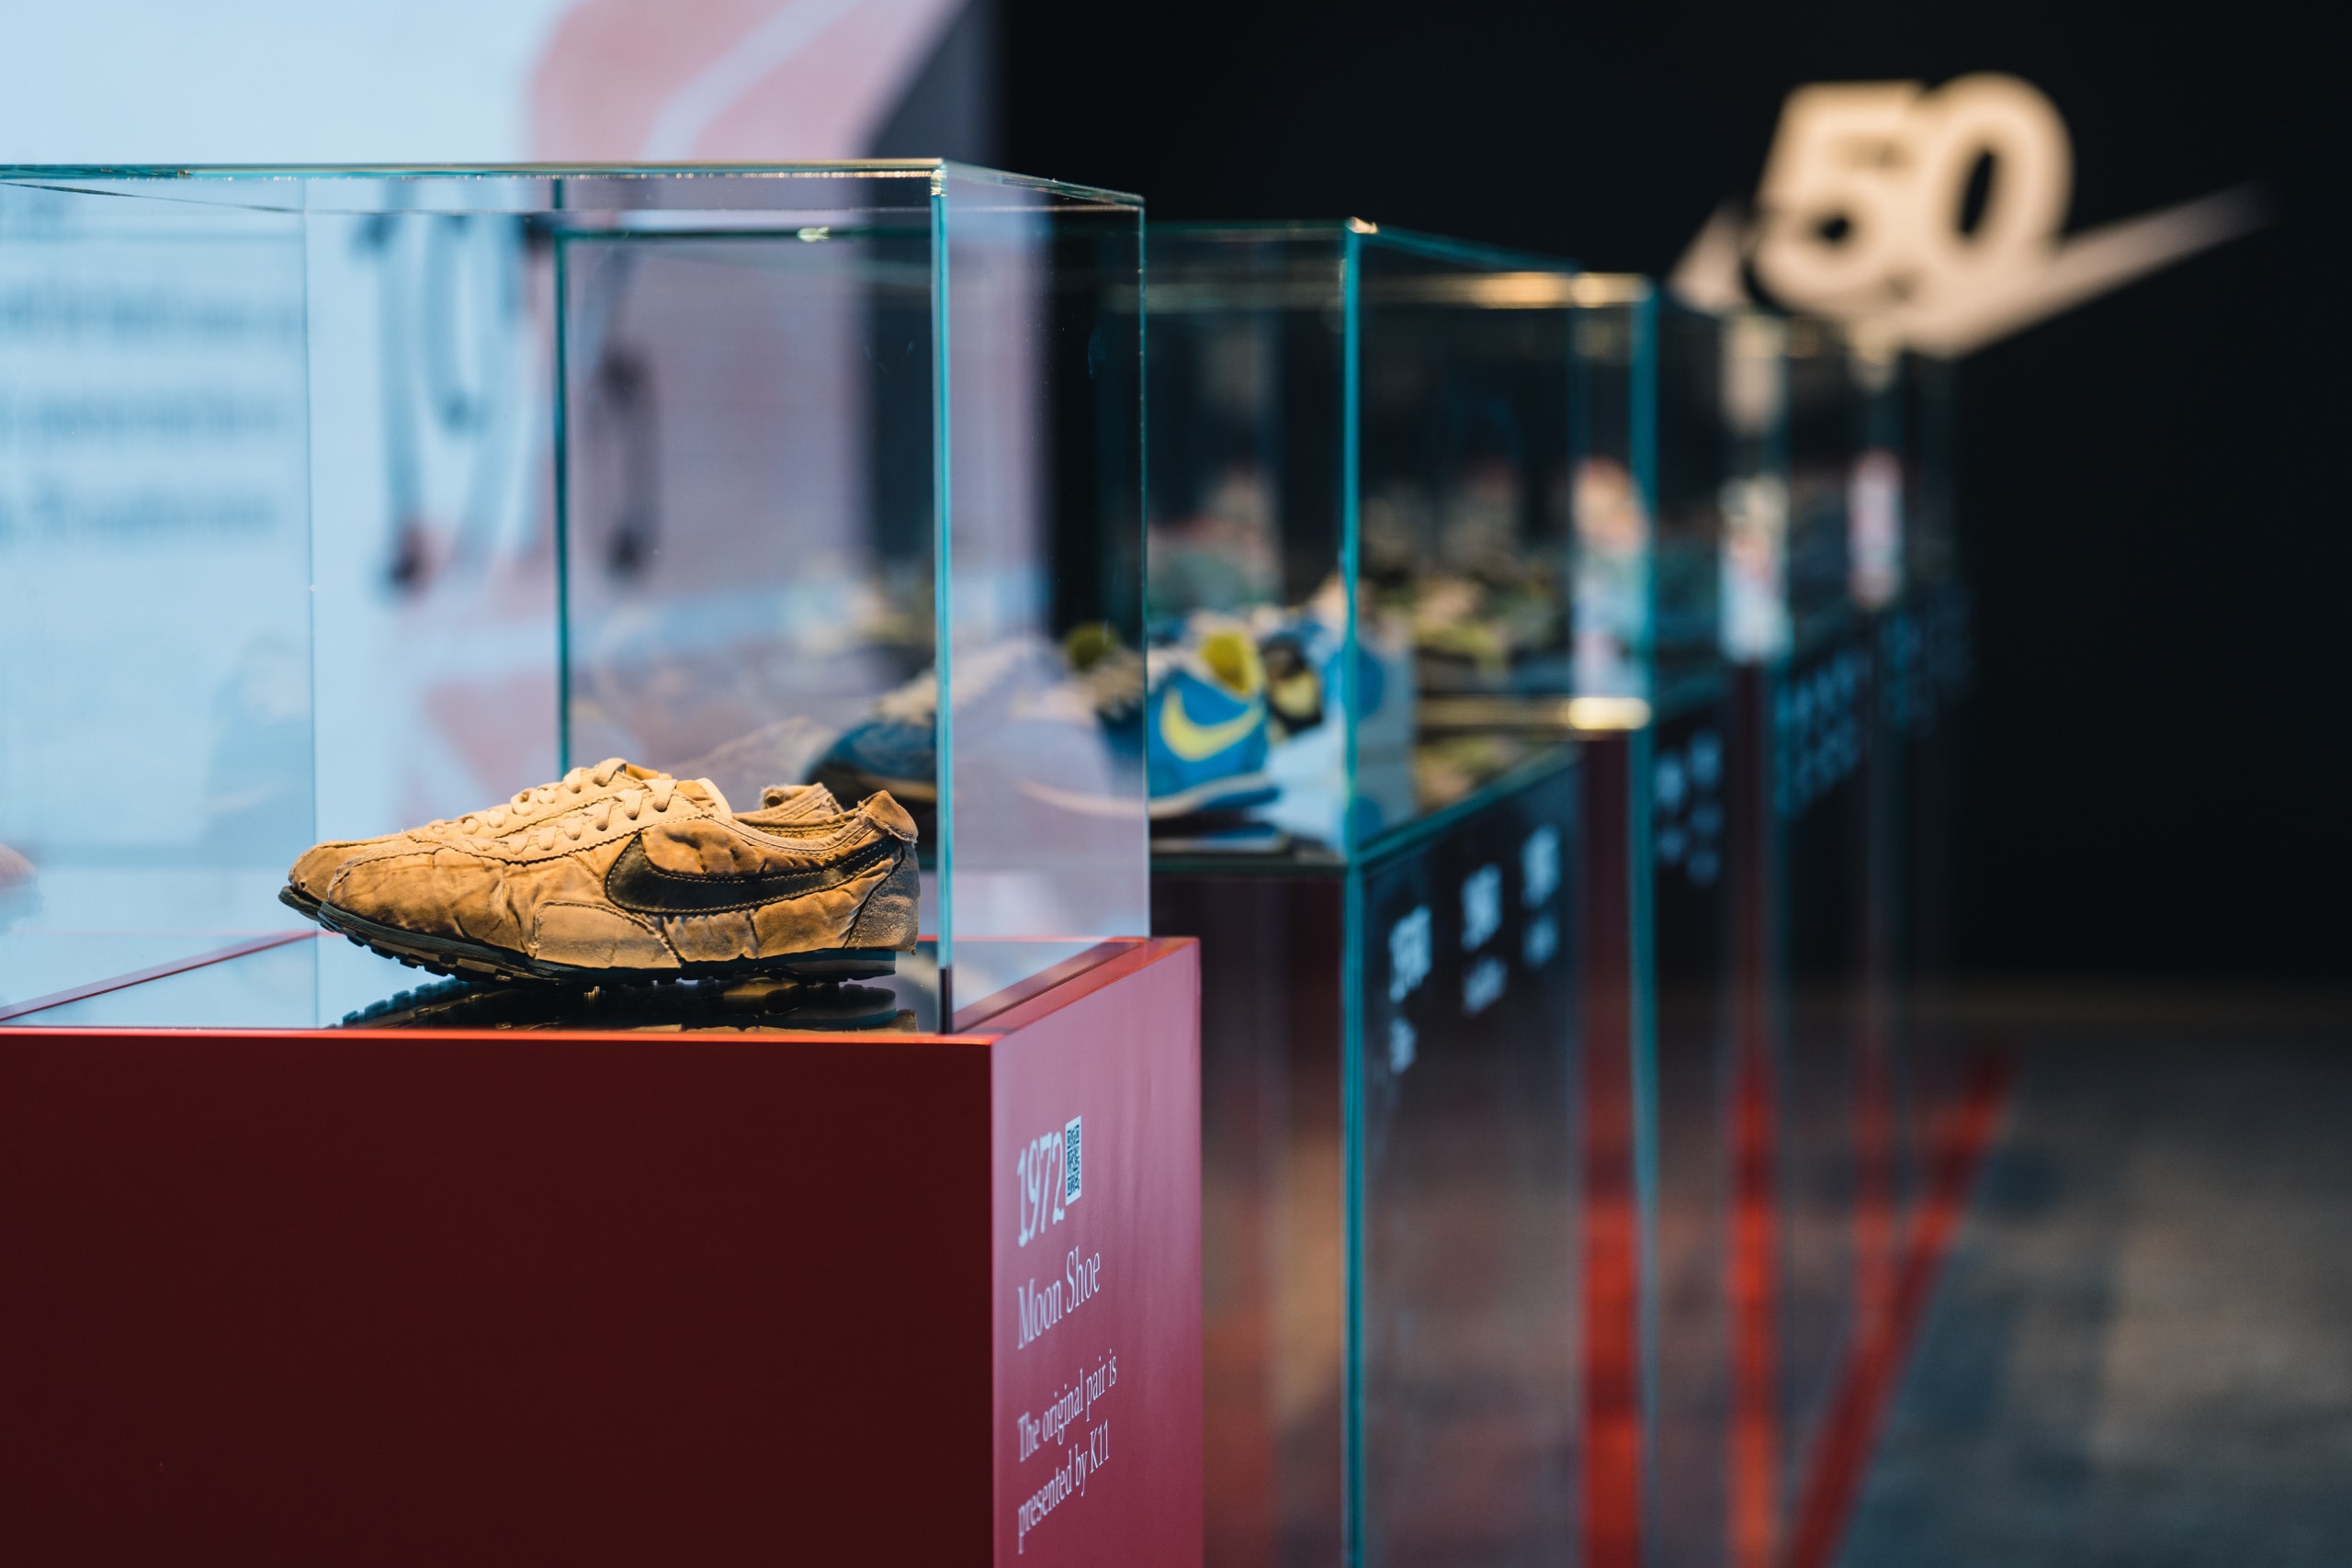 Nike 全新香港展覽《Nike at 50: A Genealogy of Progress》正式開催